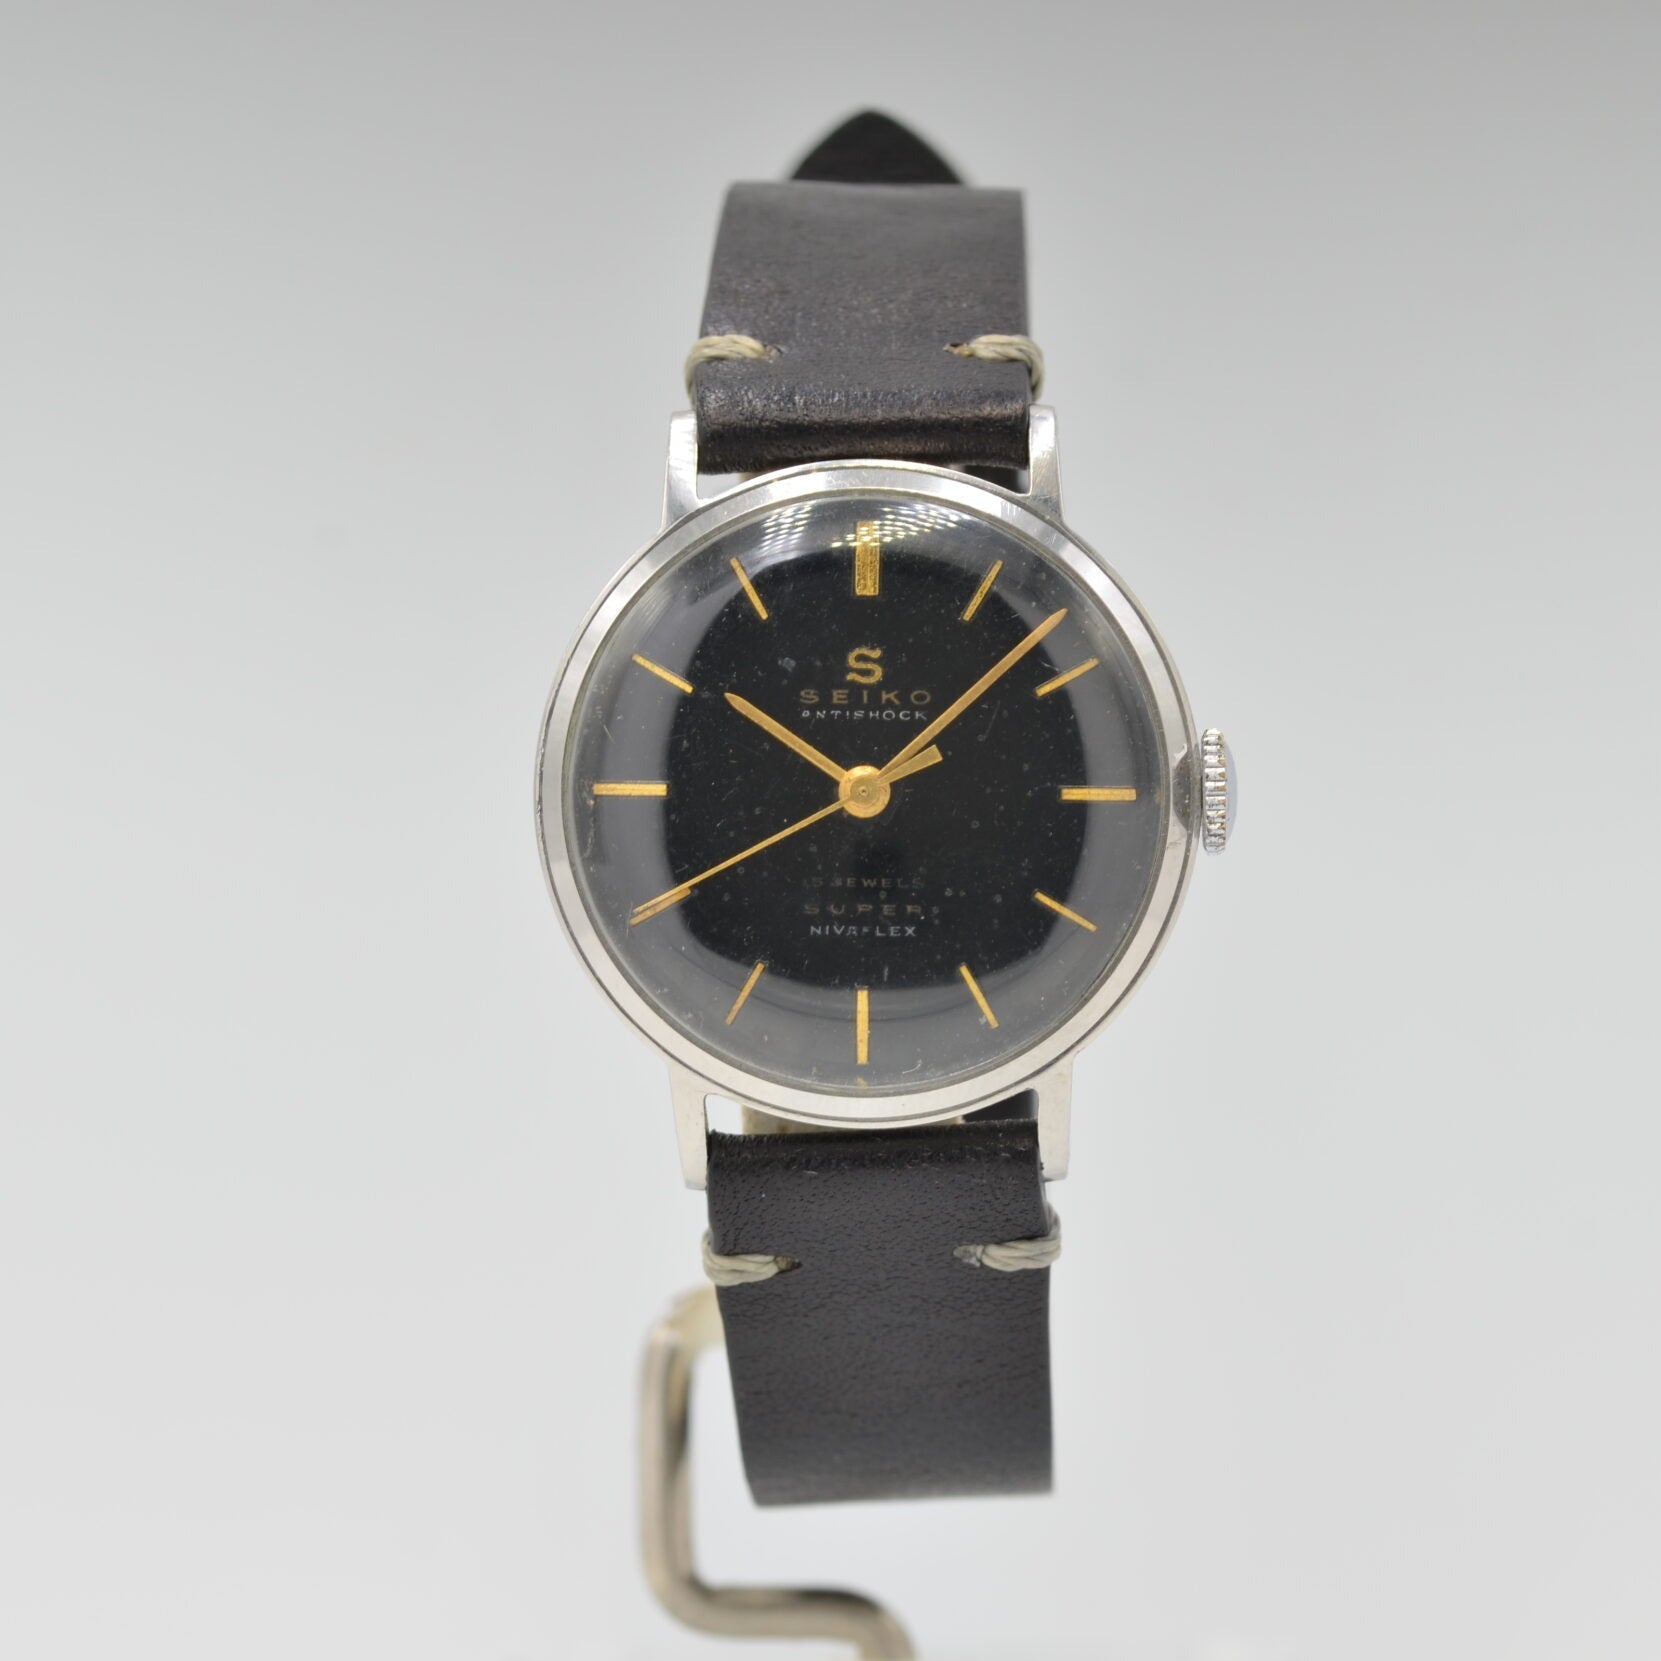 SEIKO】SスーパーSSブラックミラー文字盤 – REGALO vintage watch